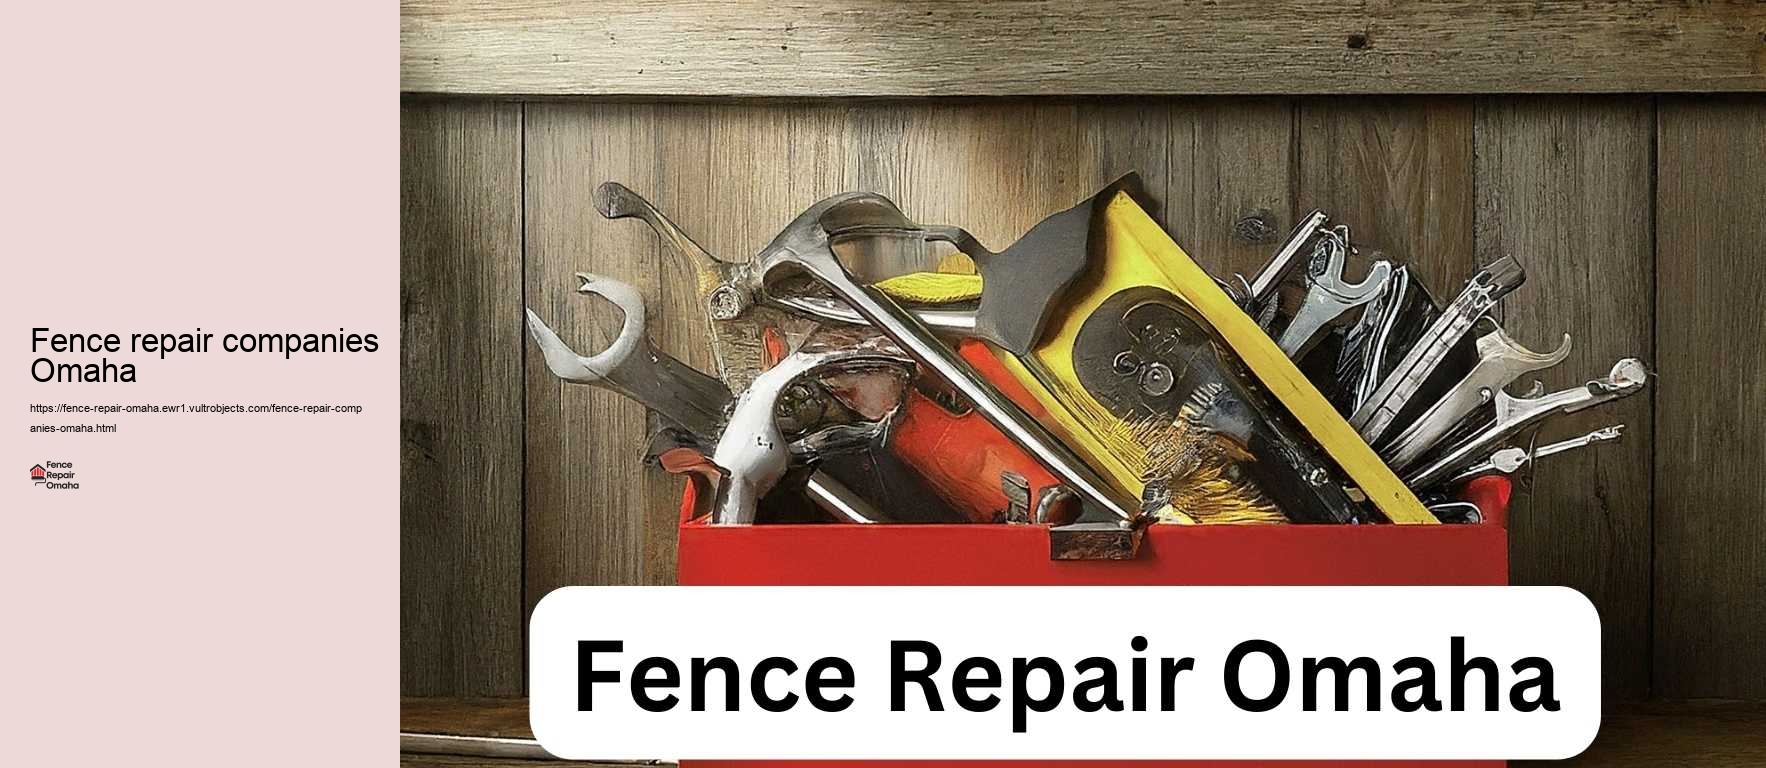 Fence repair companies Omaha